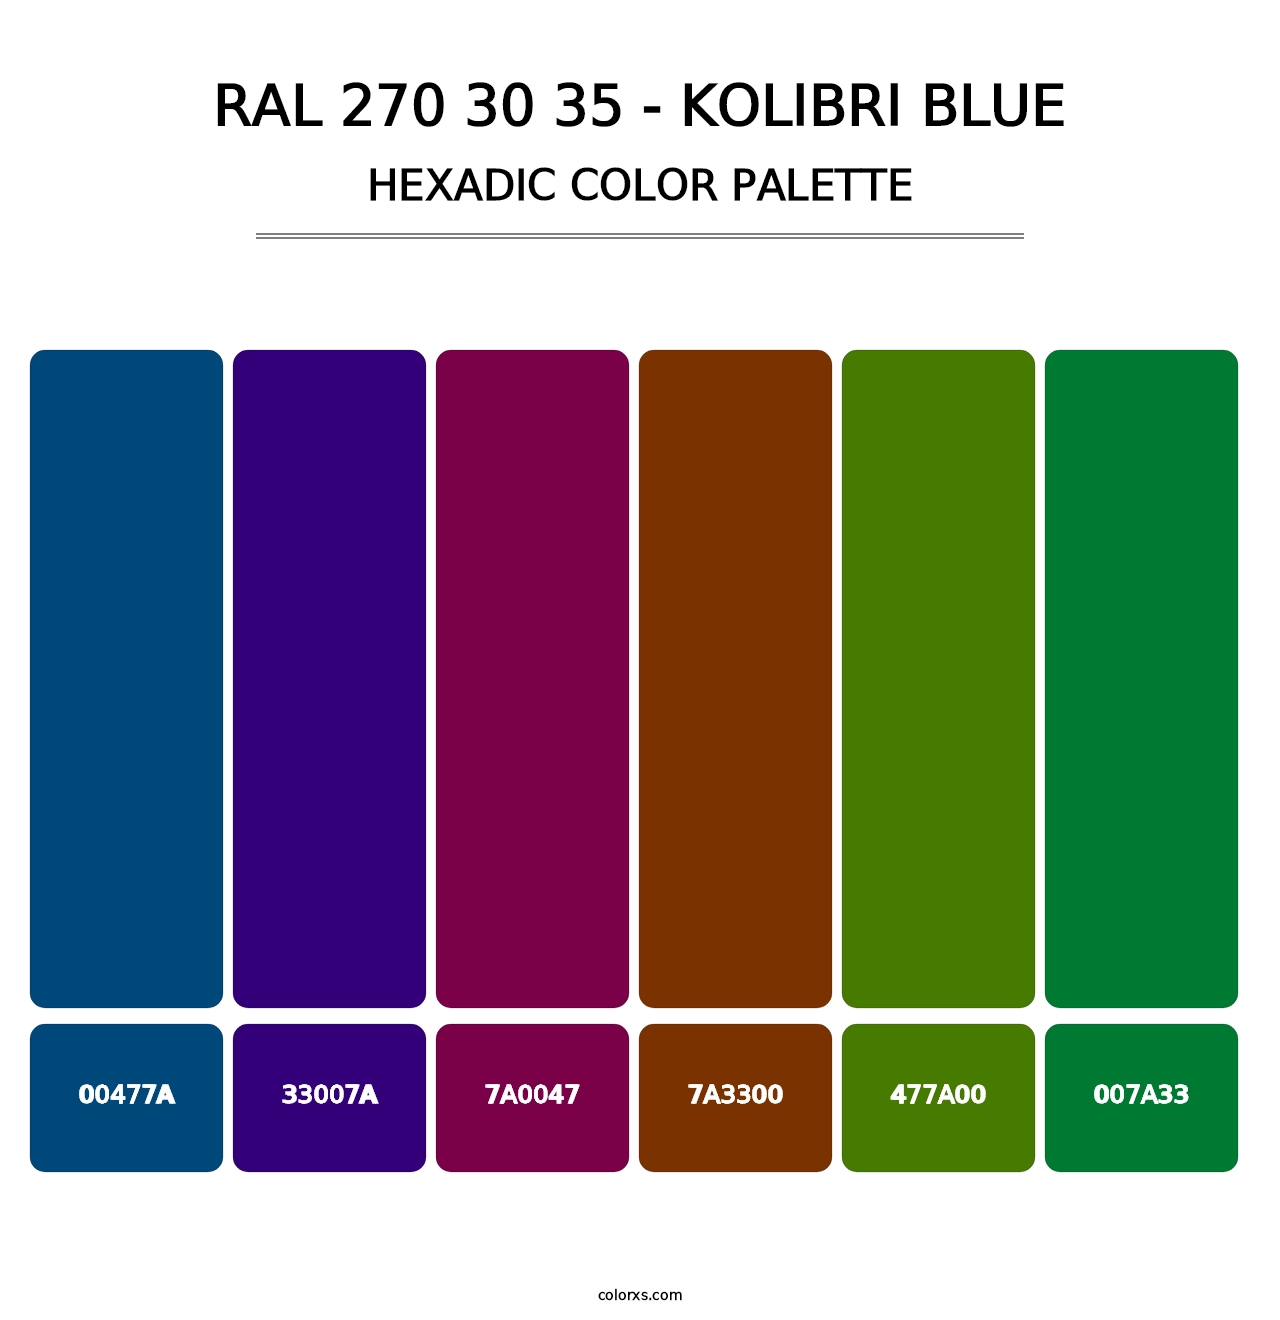 RAL 270 30 35 - Kolibri Blue - Hexadic Color Palette